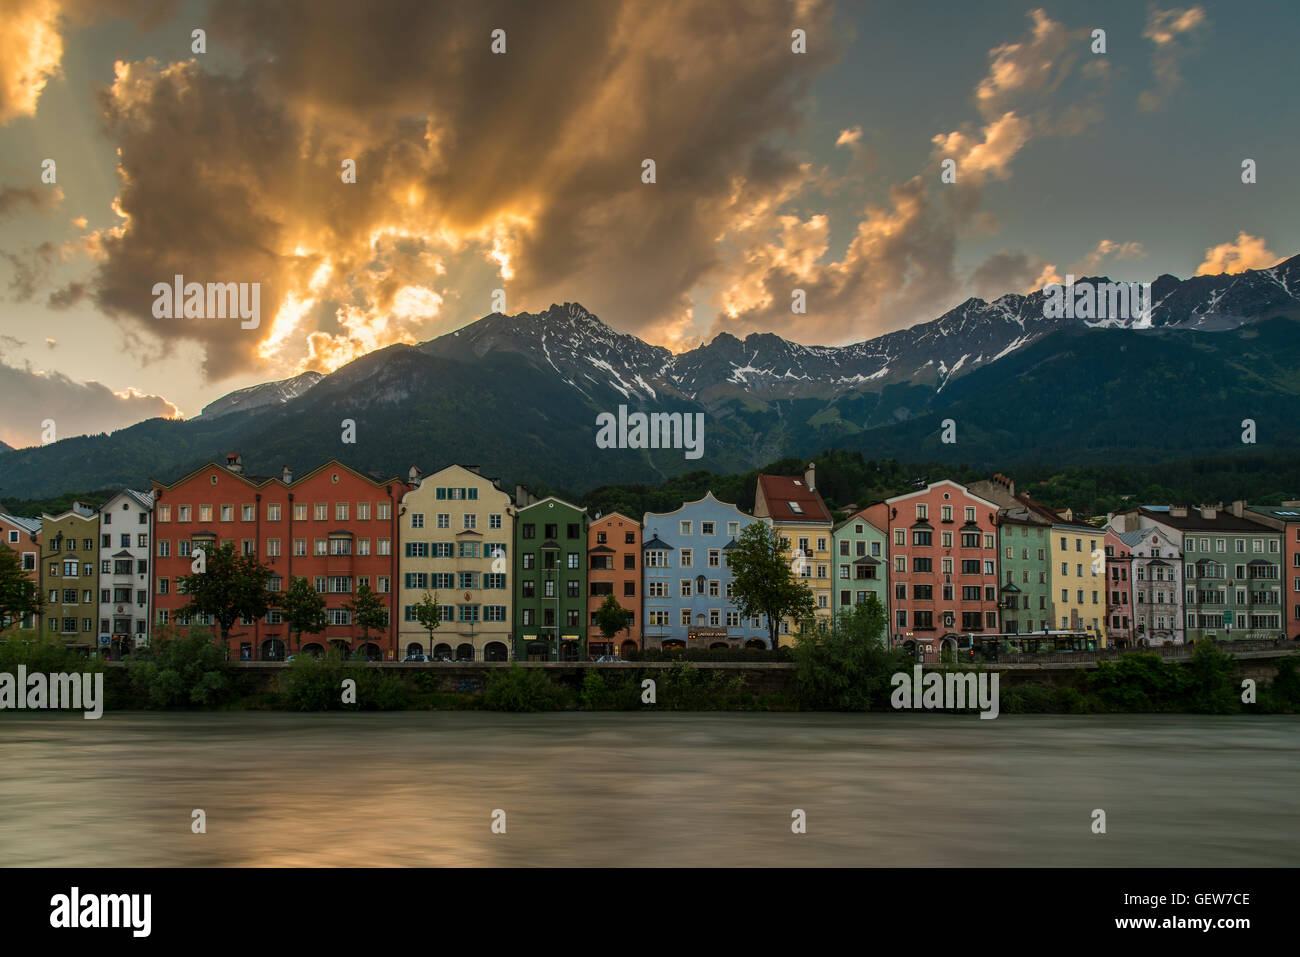 Sunset view of the colorful buildings along Inn river, Innsbruck, Tyrol, Austria Stock Photo